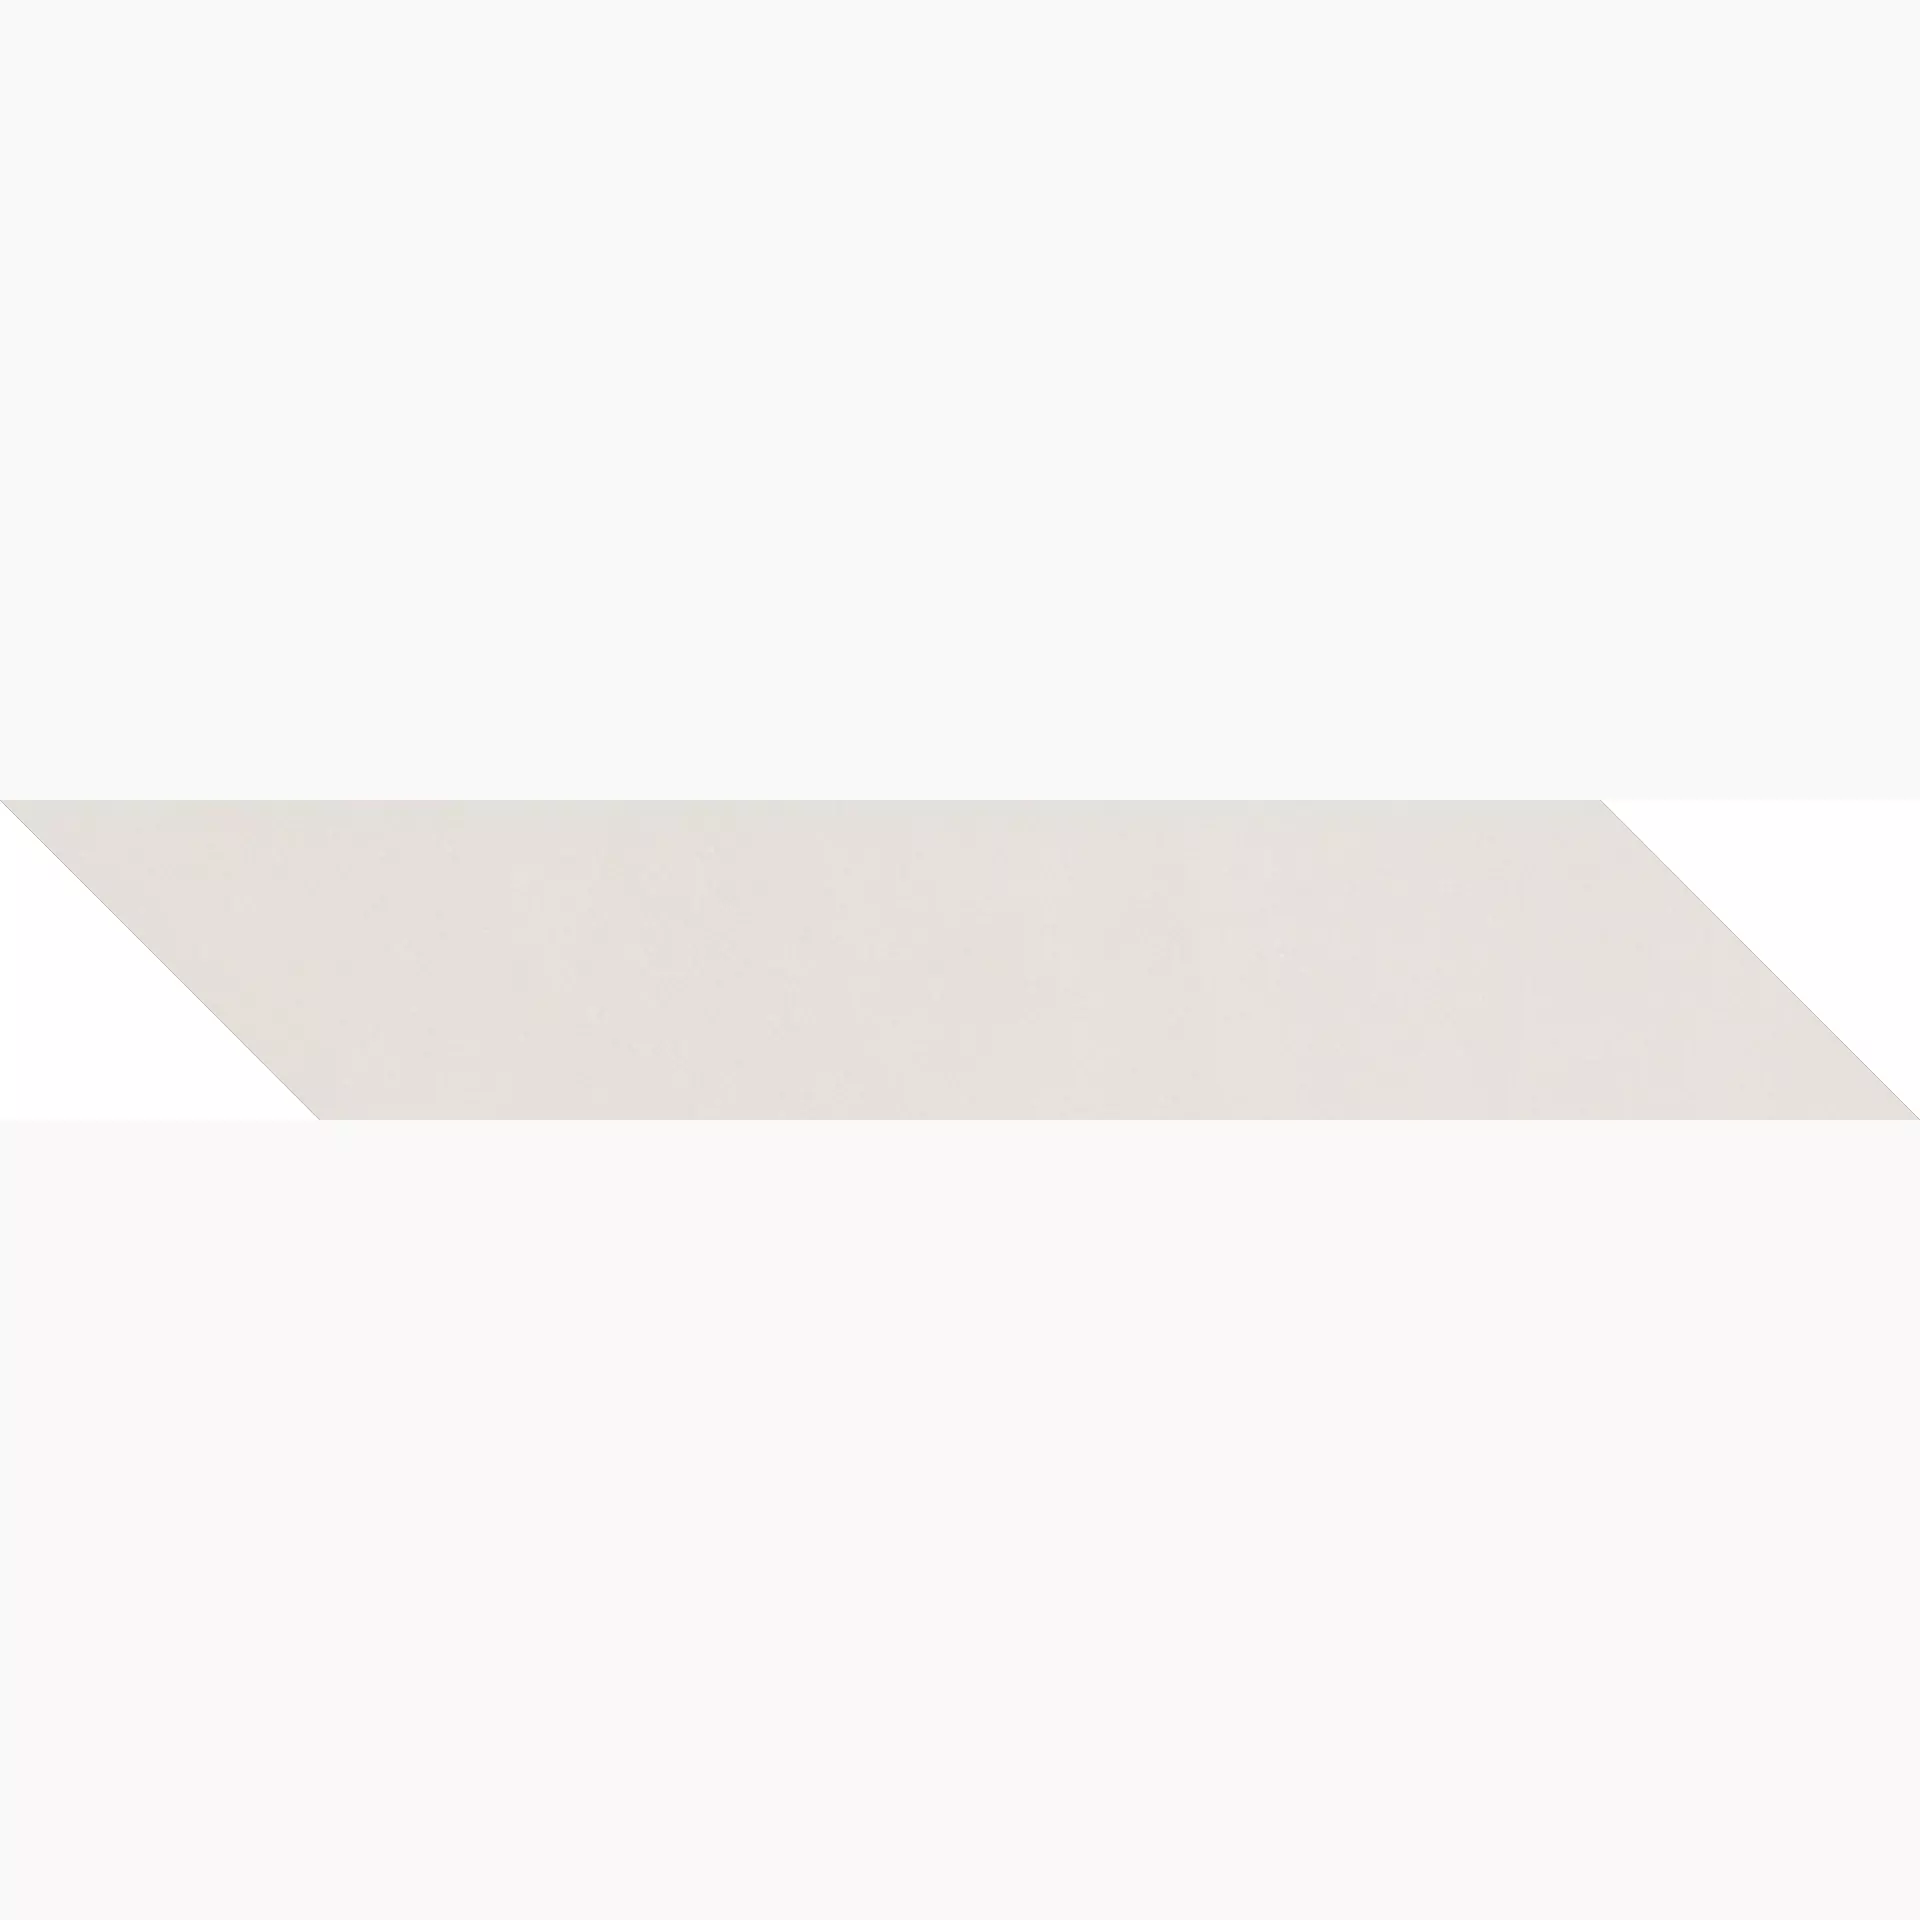 Keope Elements Design White Naturale – Matt Chevron Left 54364130 10x60cm rectified 9mm